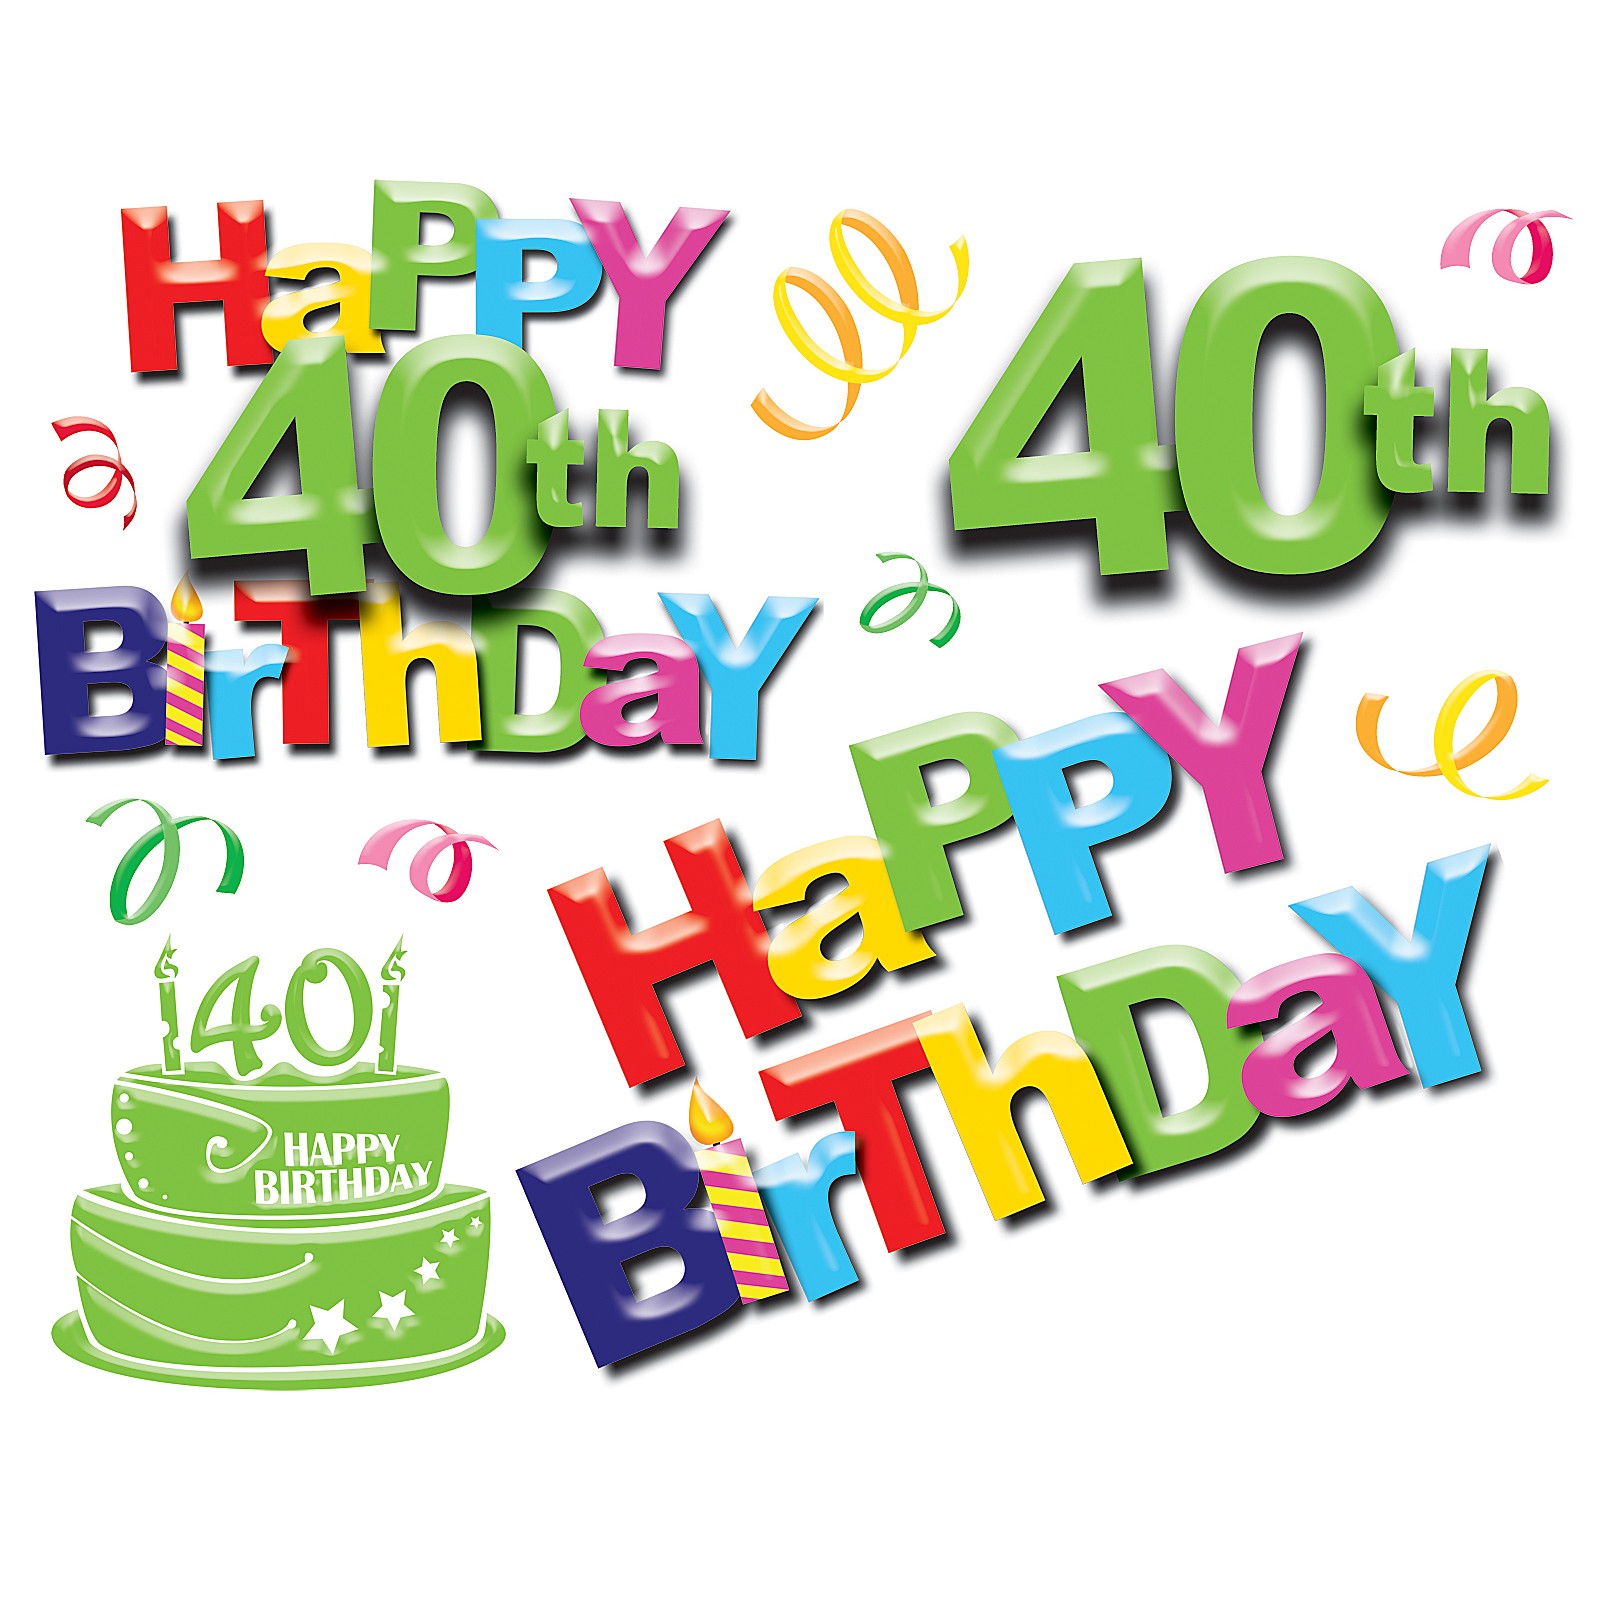 40th birthday clipart free - 